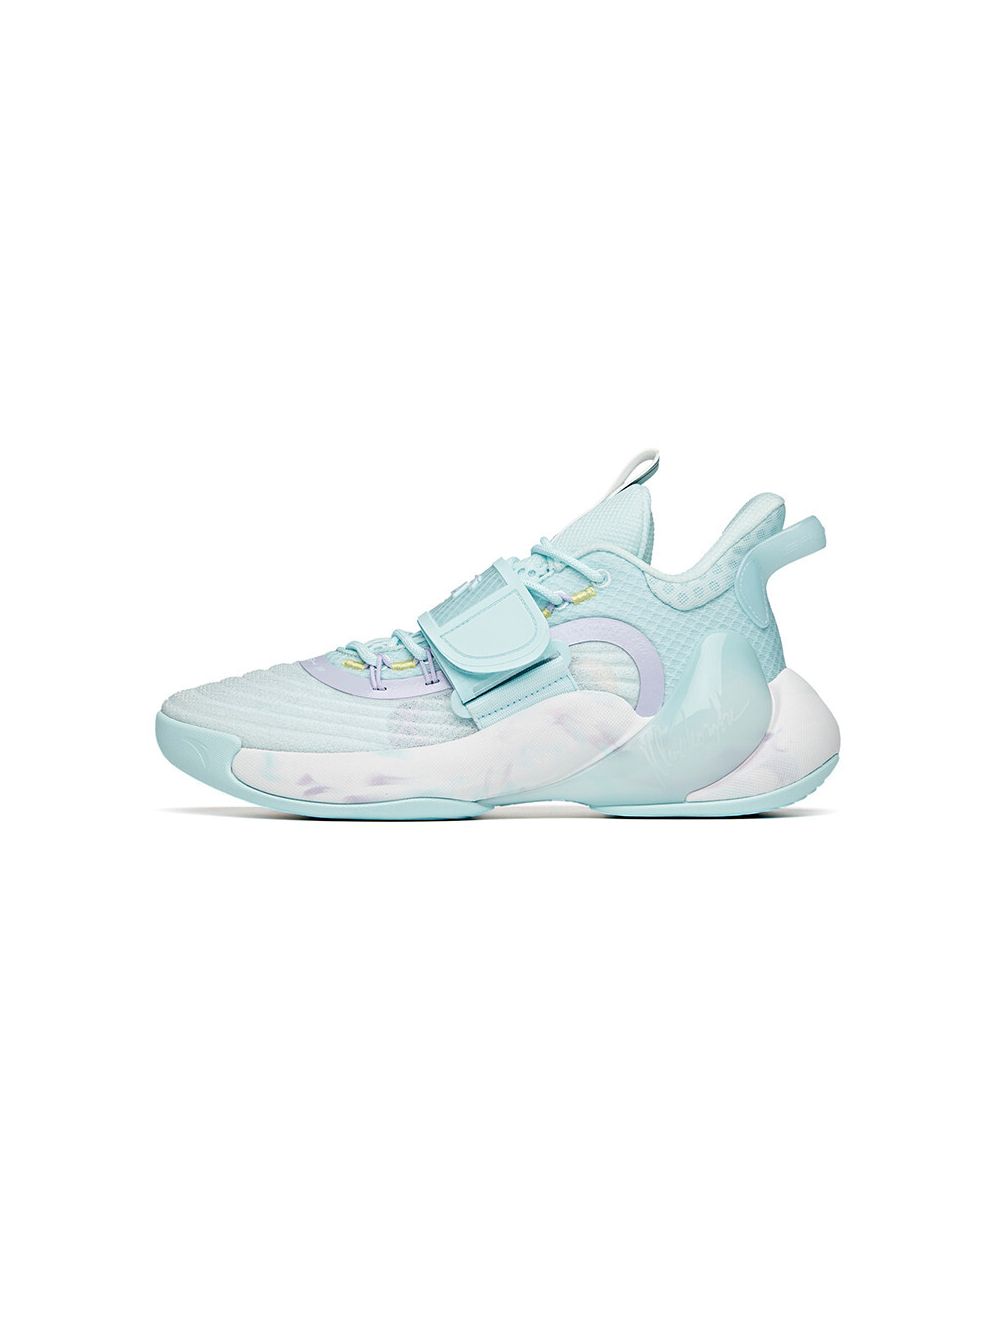 

Anta klay Thompson KT original Men's Basketball Shoes Splash 3.0 2021 - Bubble MINT Sneakers 112121604S-1, As pic